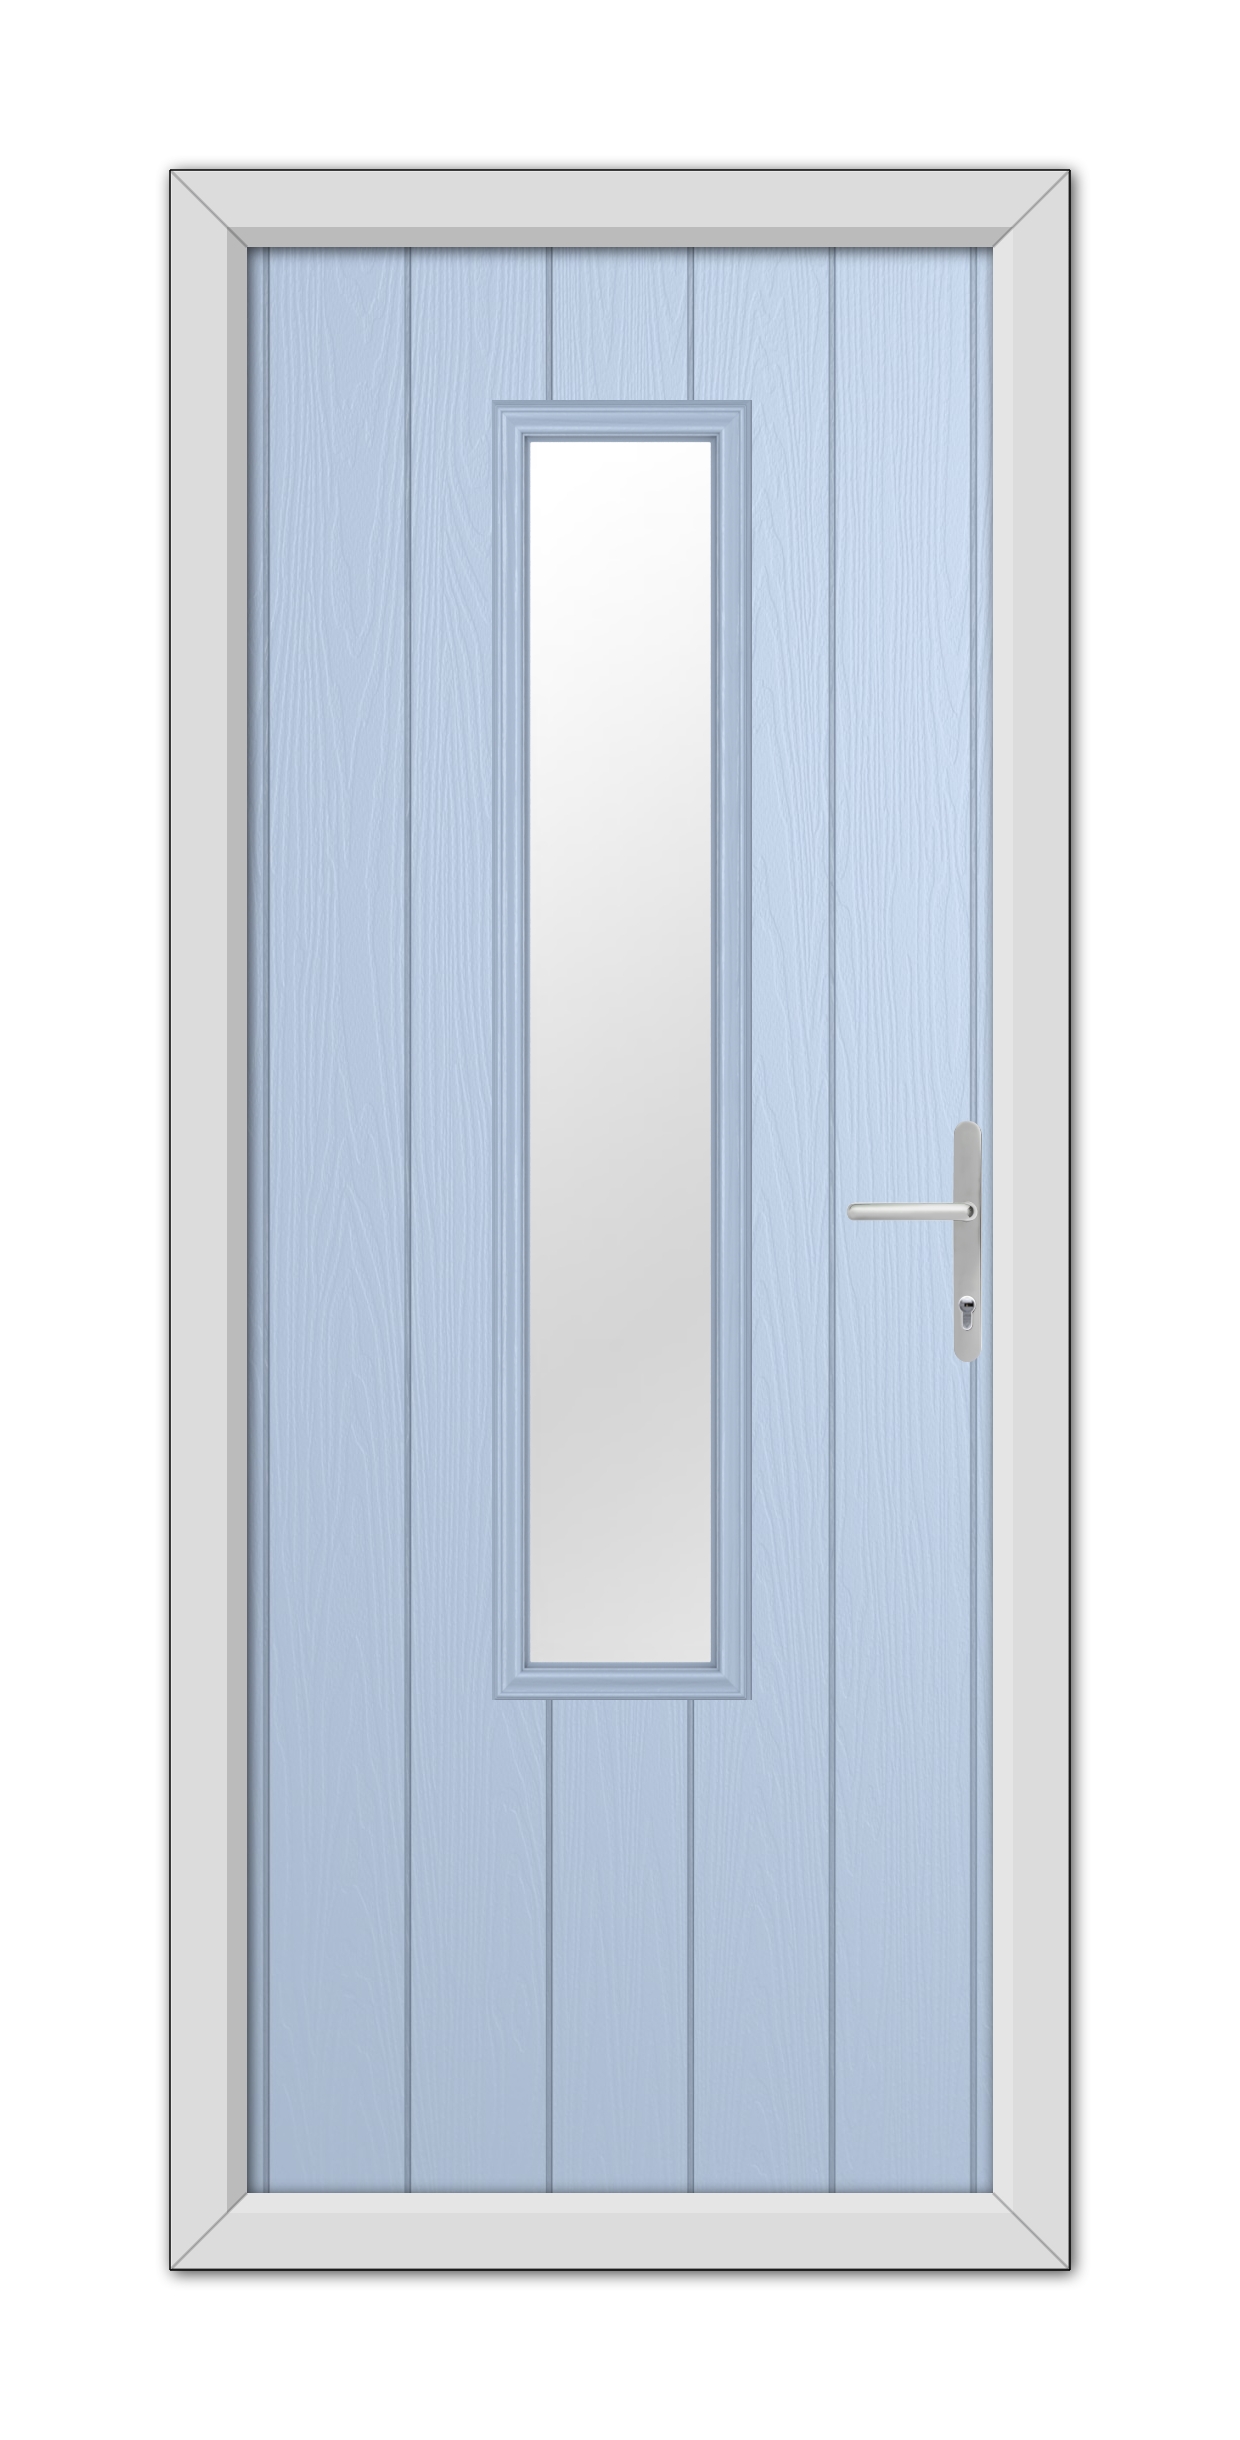 A Duck Egg Blue Abercorn Composite Door with a vertical rectangular window and a metallic door handle, set within a white door frame.